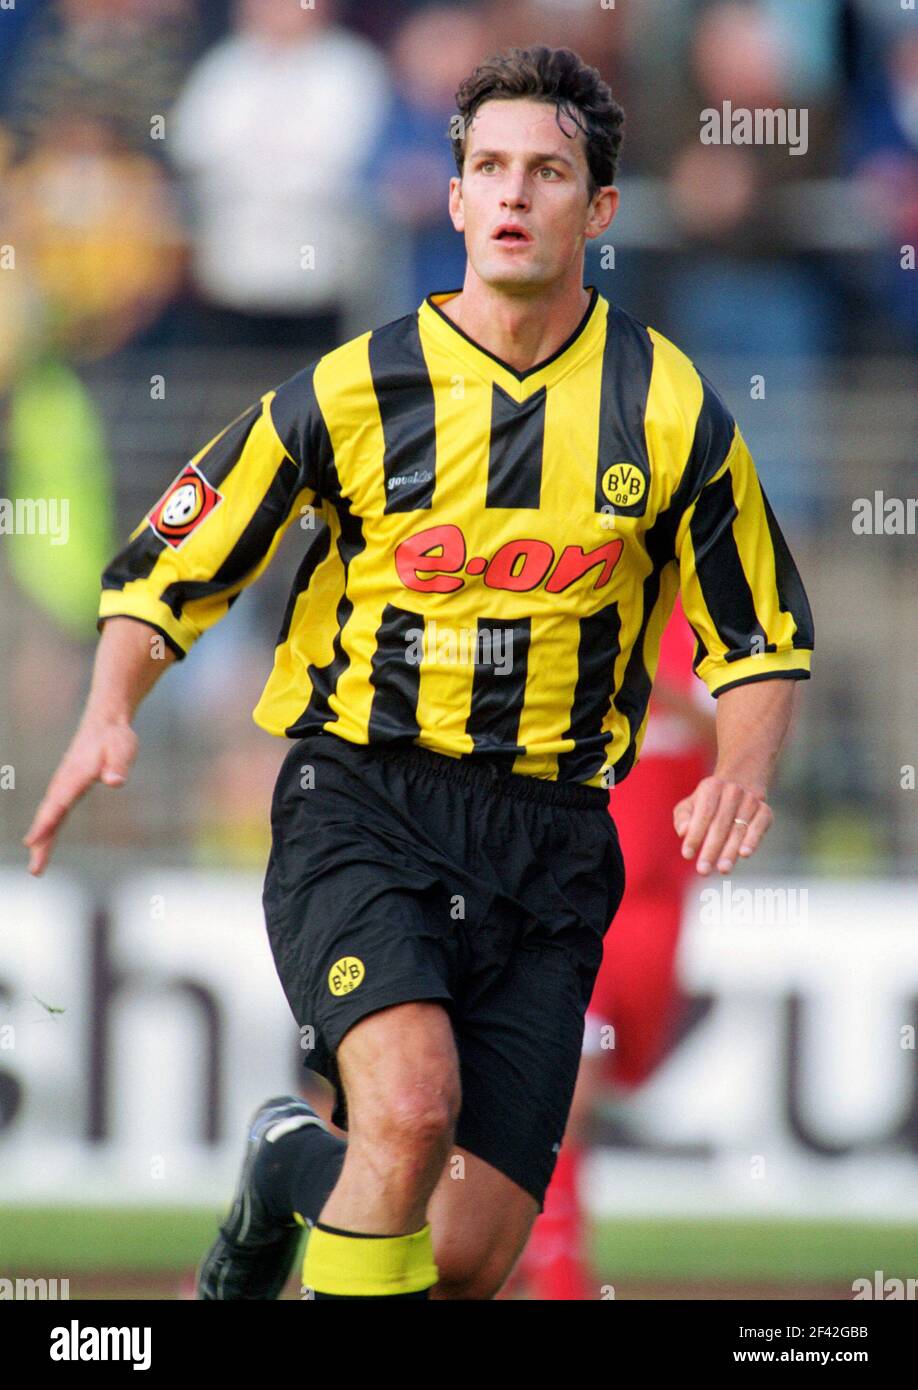 Dortmund, Germany 18.7.2000, Football:  Bundesliga season 2000/01,  pre-season test match Borussia Dortmund (BVB, yellow) - Heiko HERRLICH Stock Photo